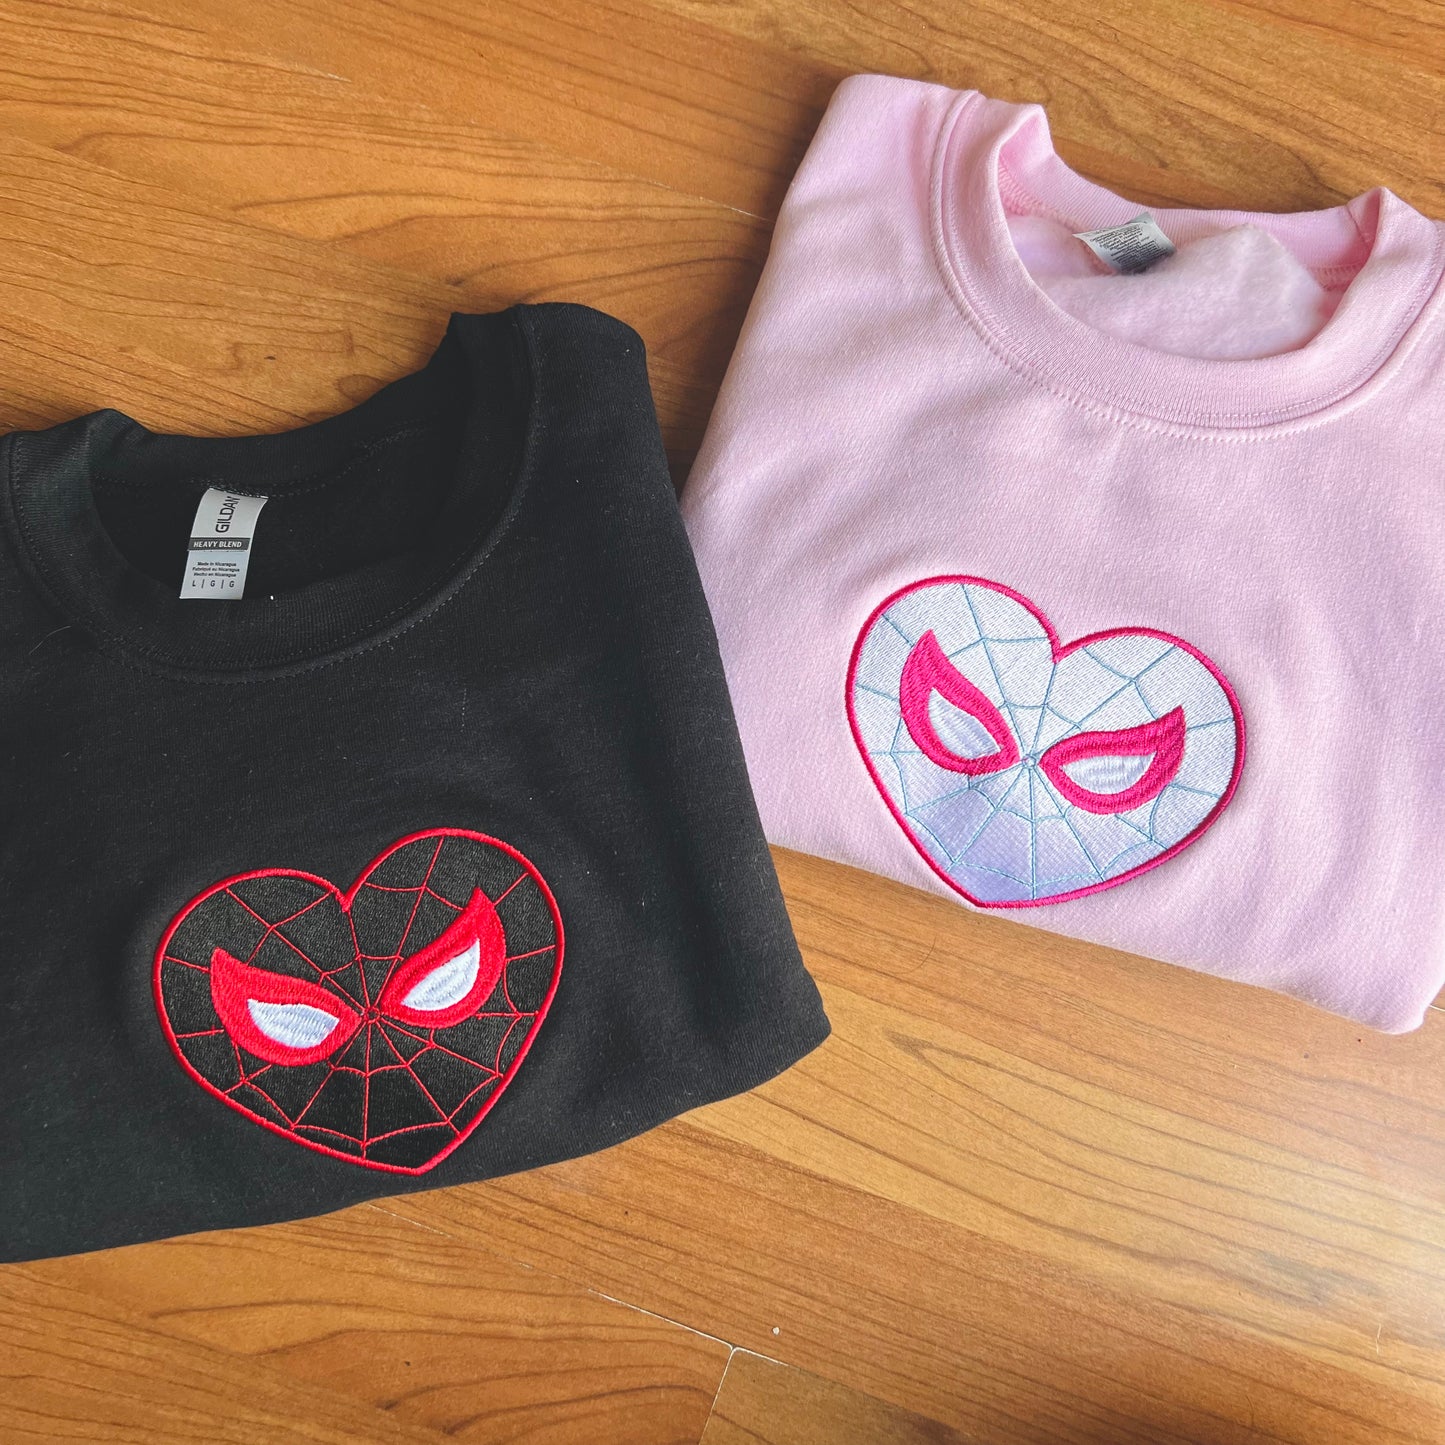 Miles & Gwen embroidered matching sweatshirts